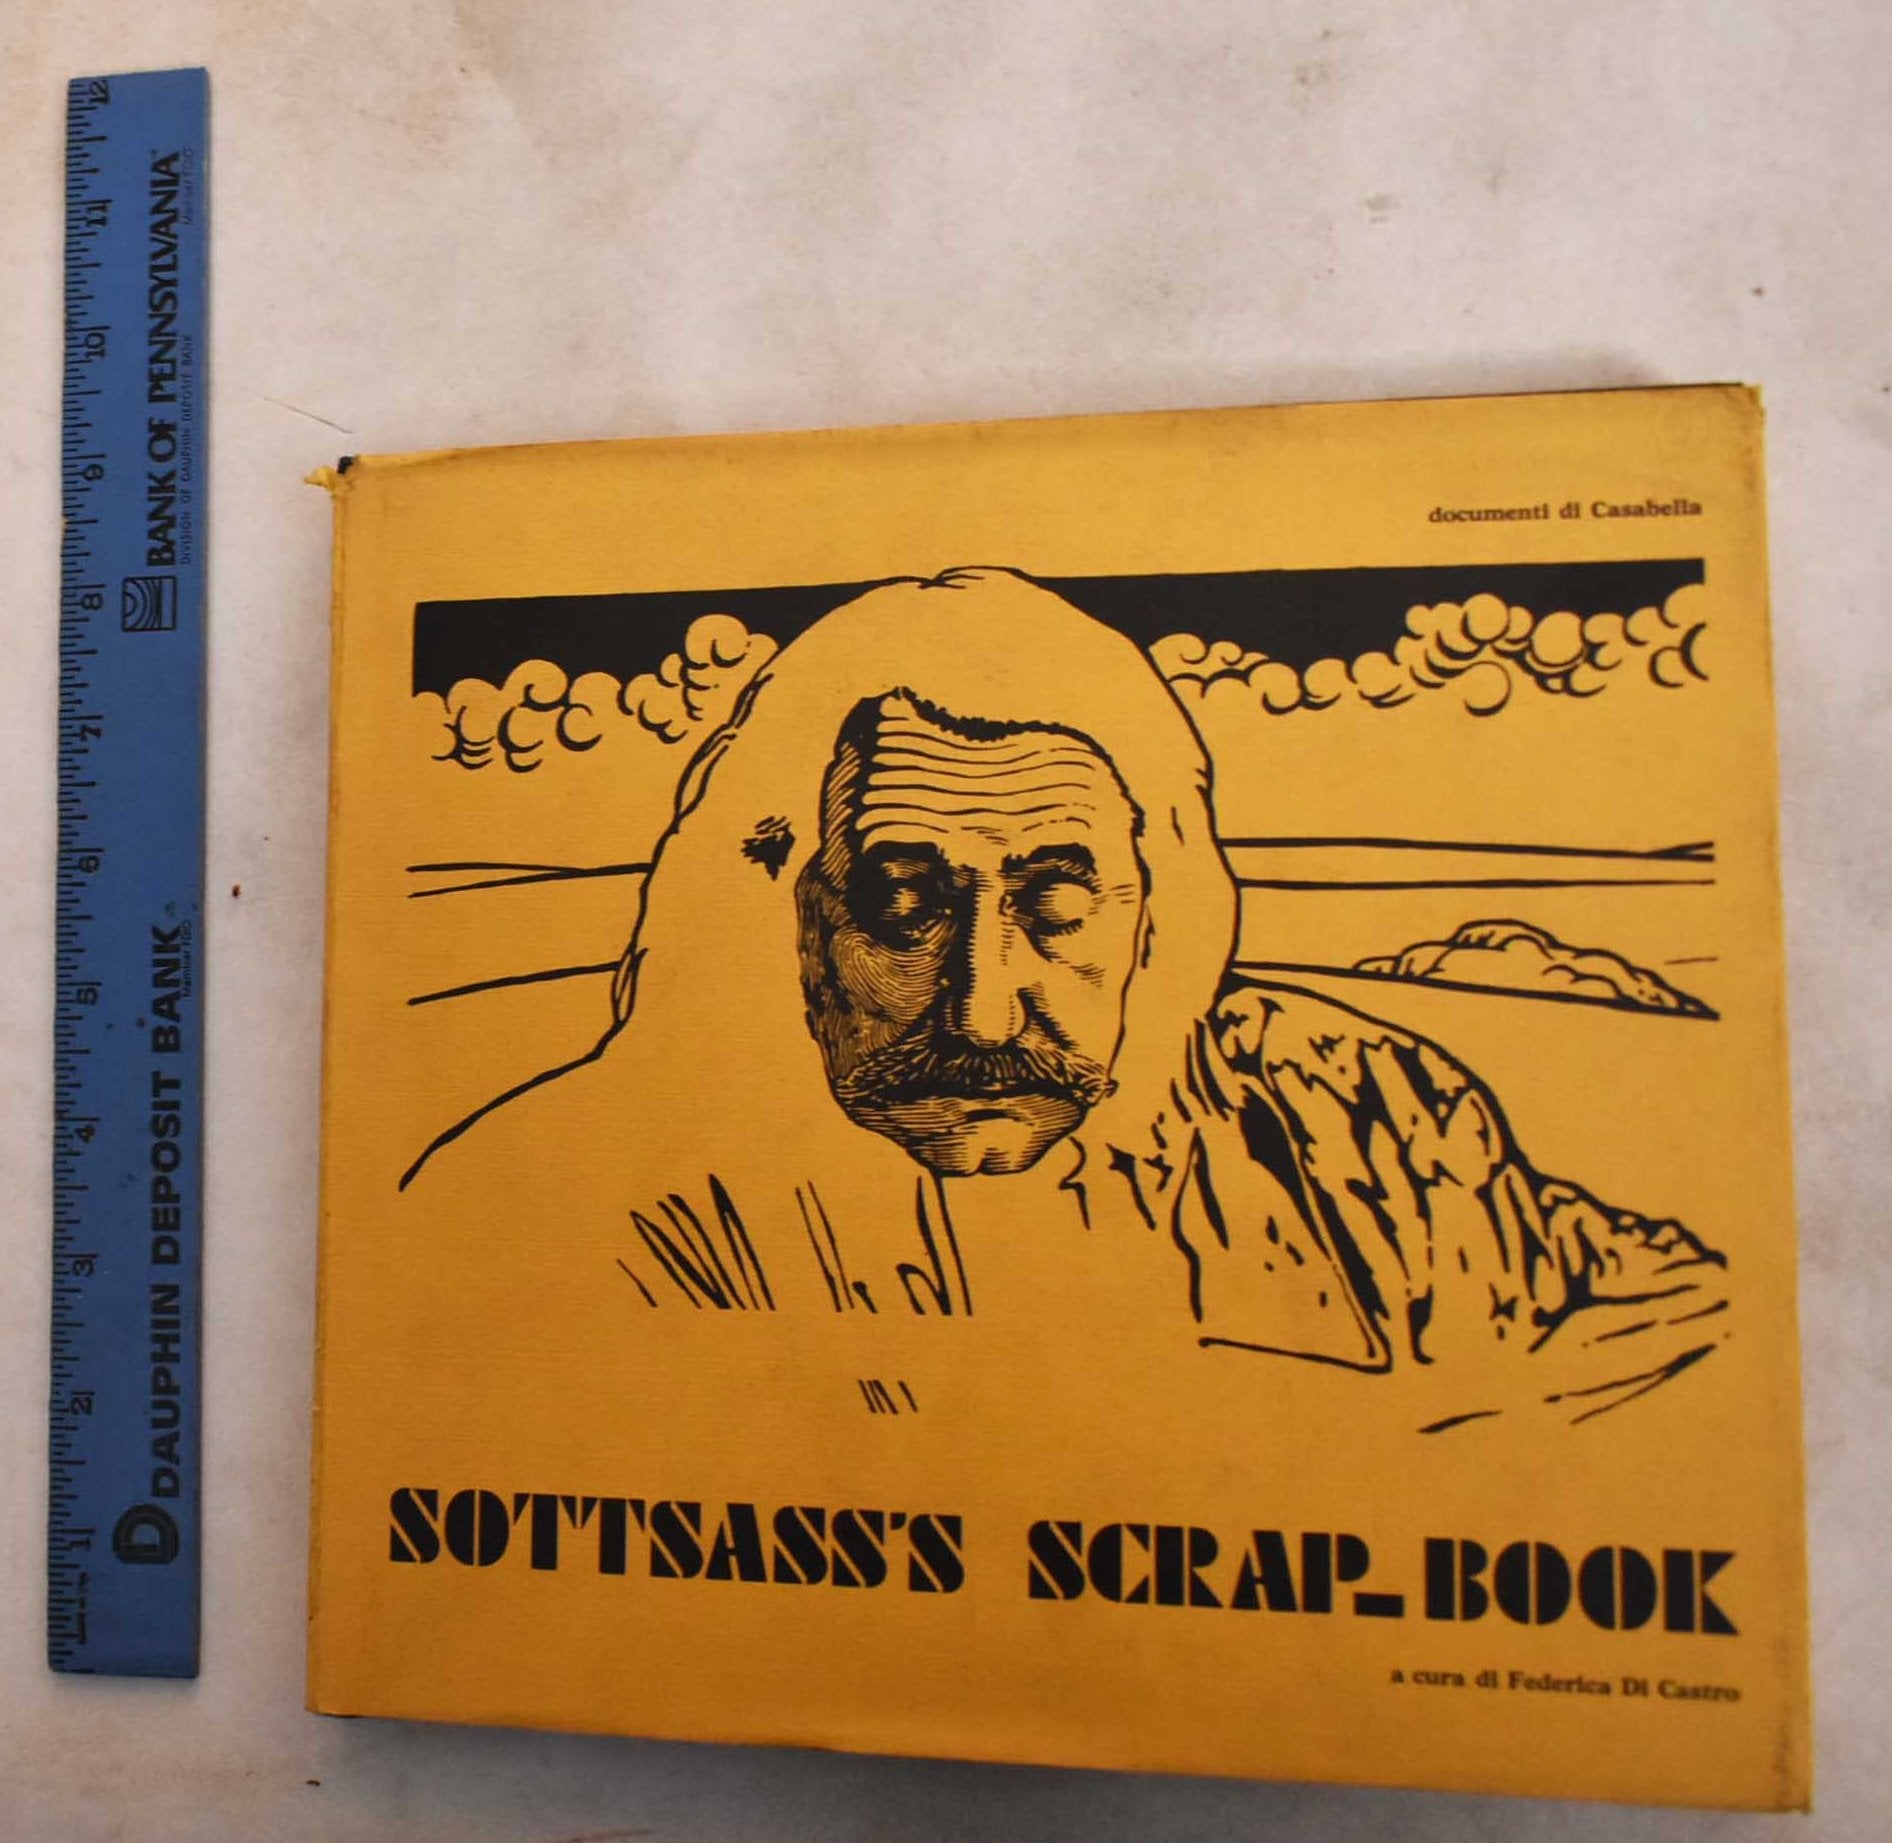 Sottsass's Scrap-Book: Disegni e Note